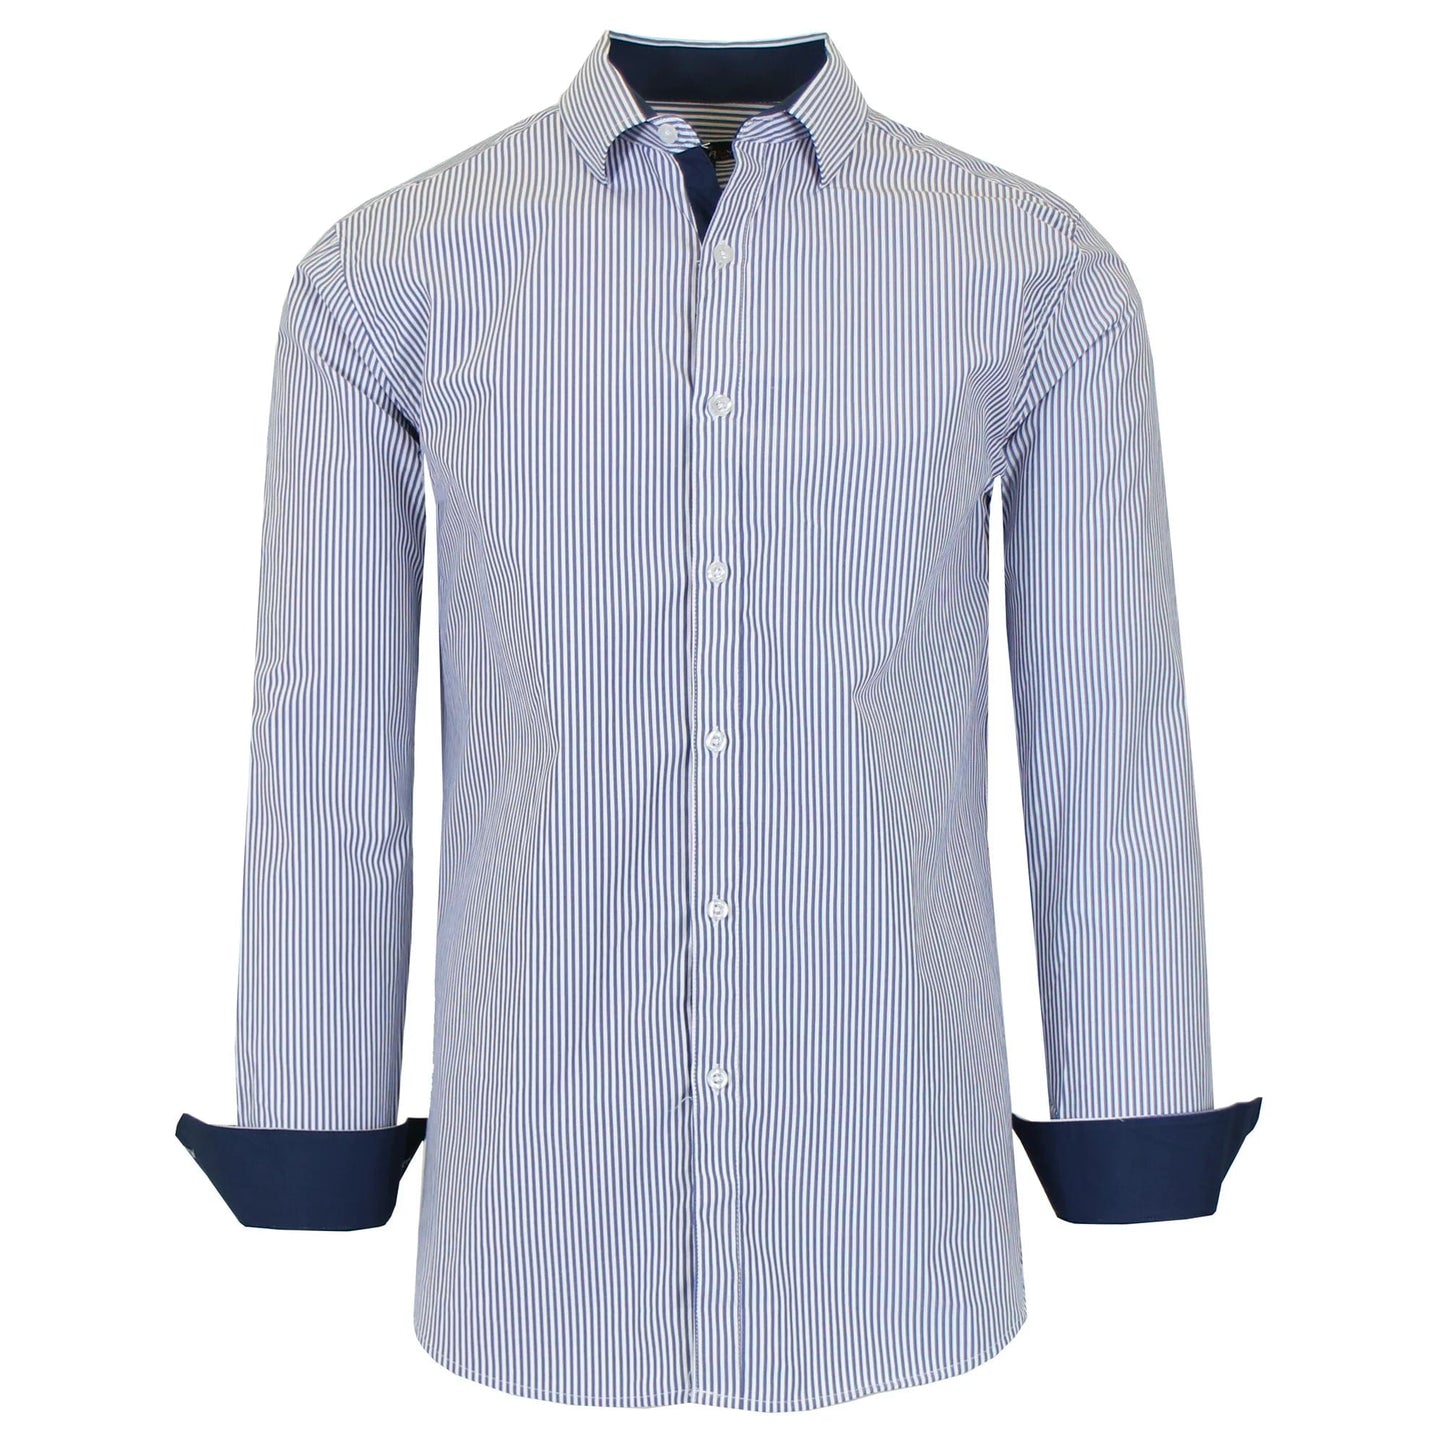 Men's Long Sleeve Slim Fit Dress Shirts (S-2XL) - GalaxybyHarvic